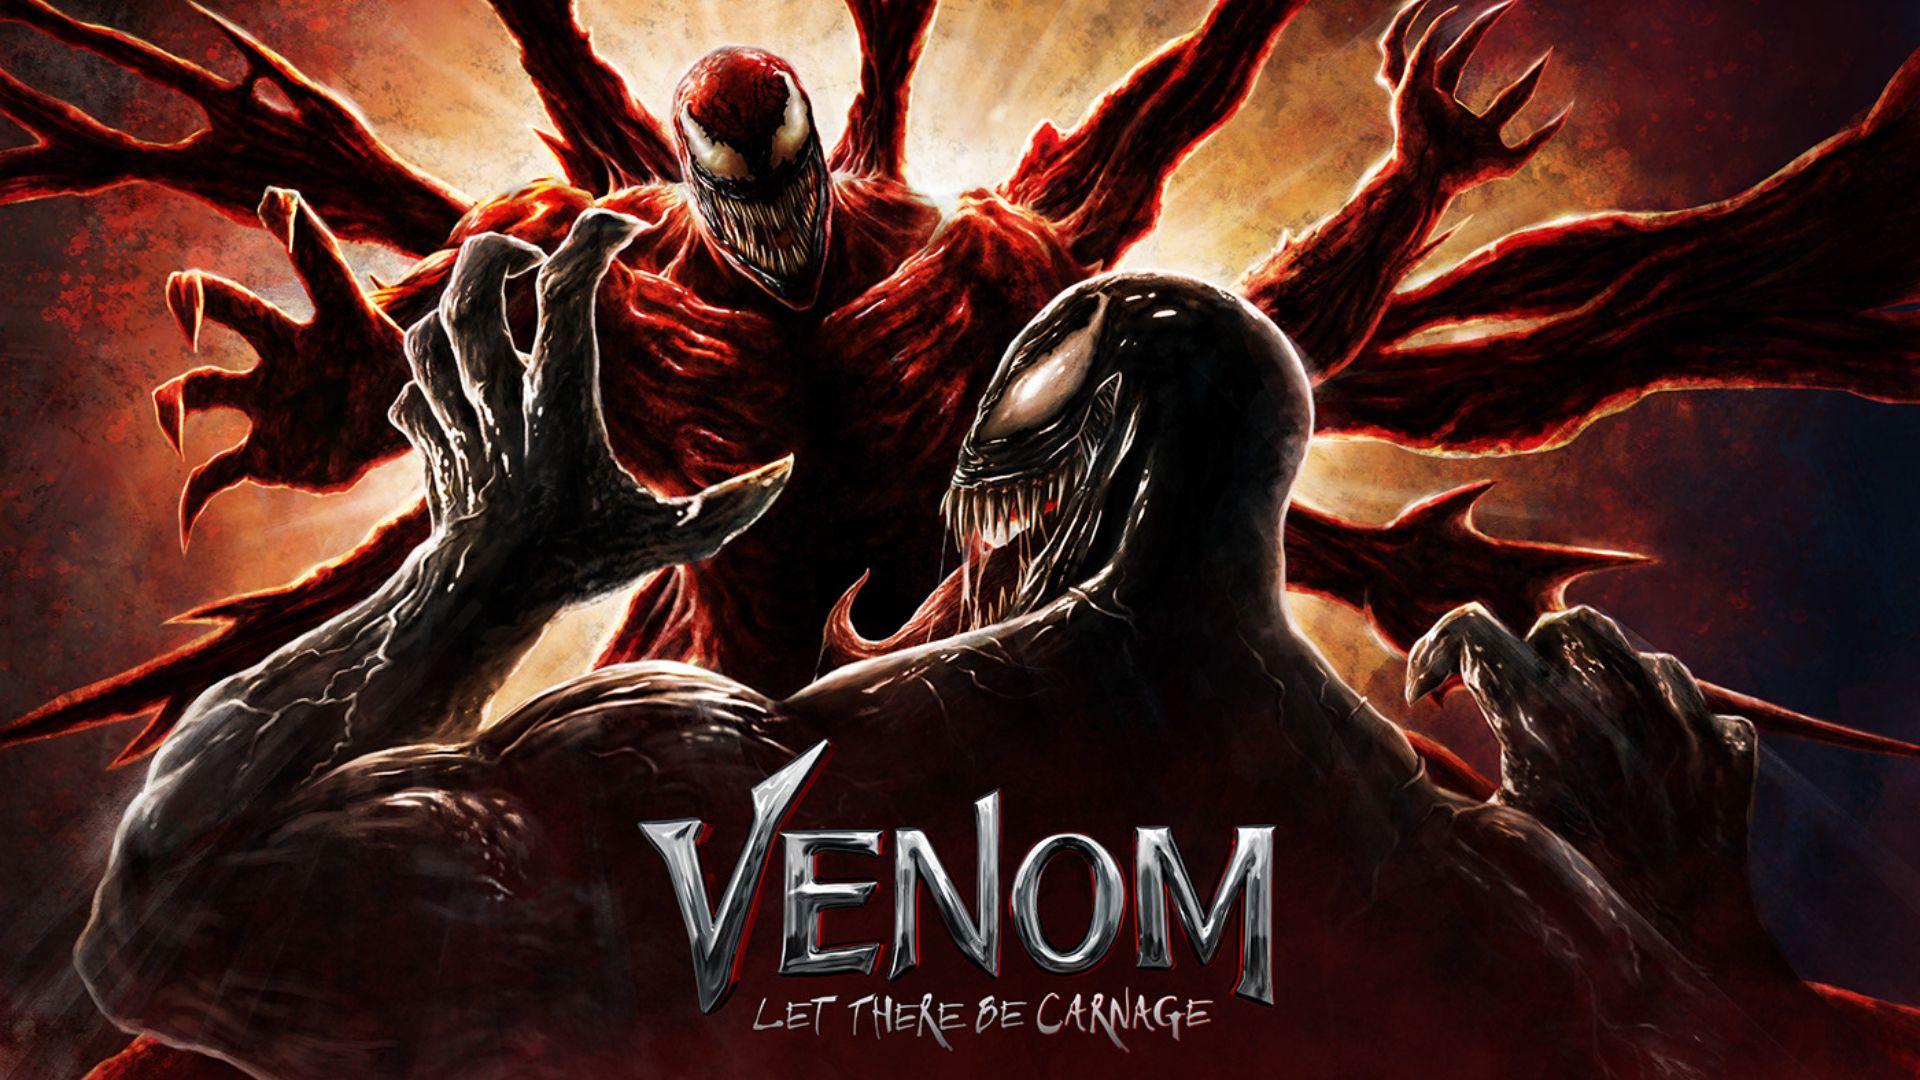 Be carnage 2021 فيلم let there venom فيلم Venom